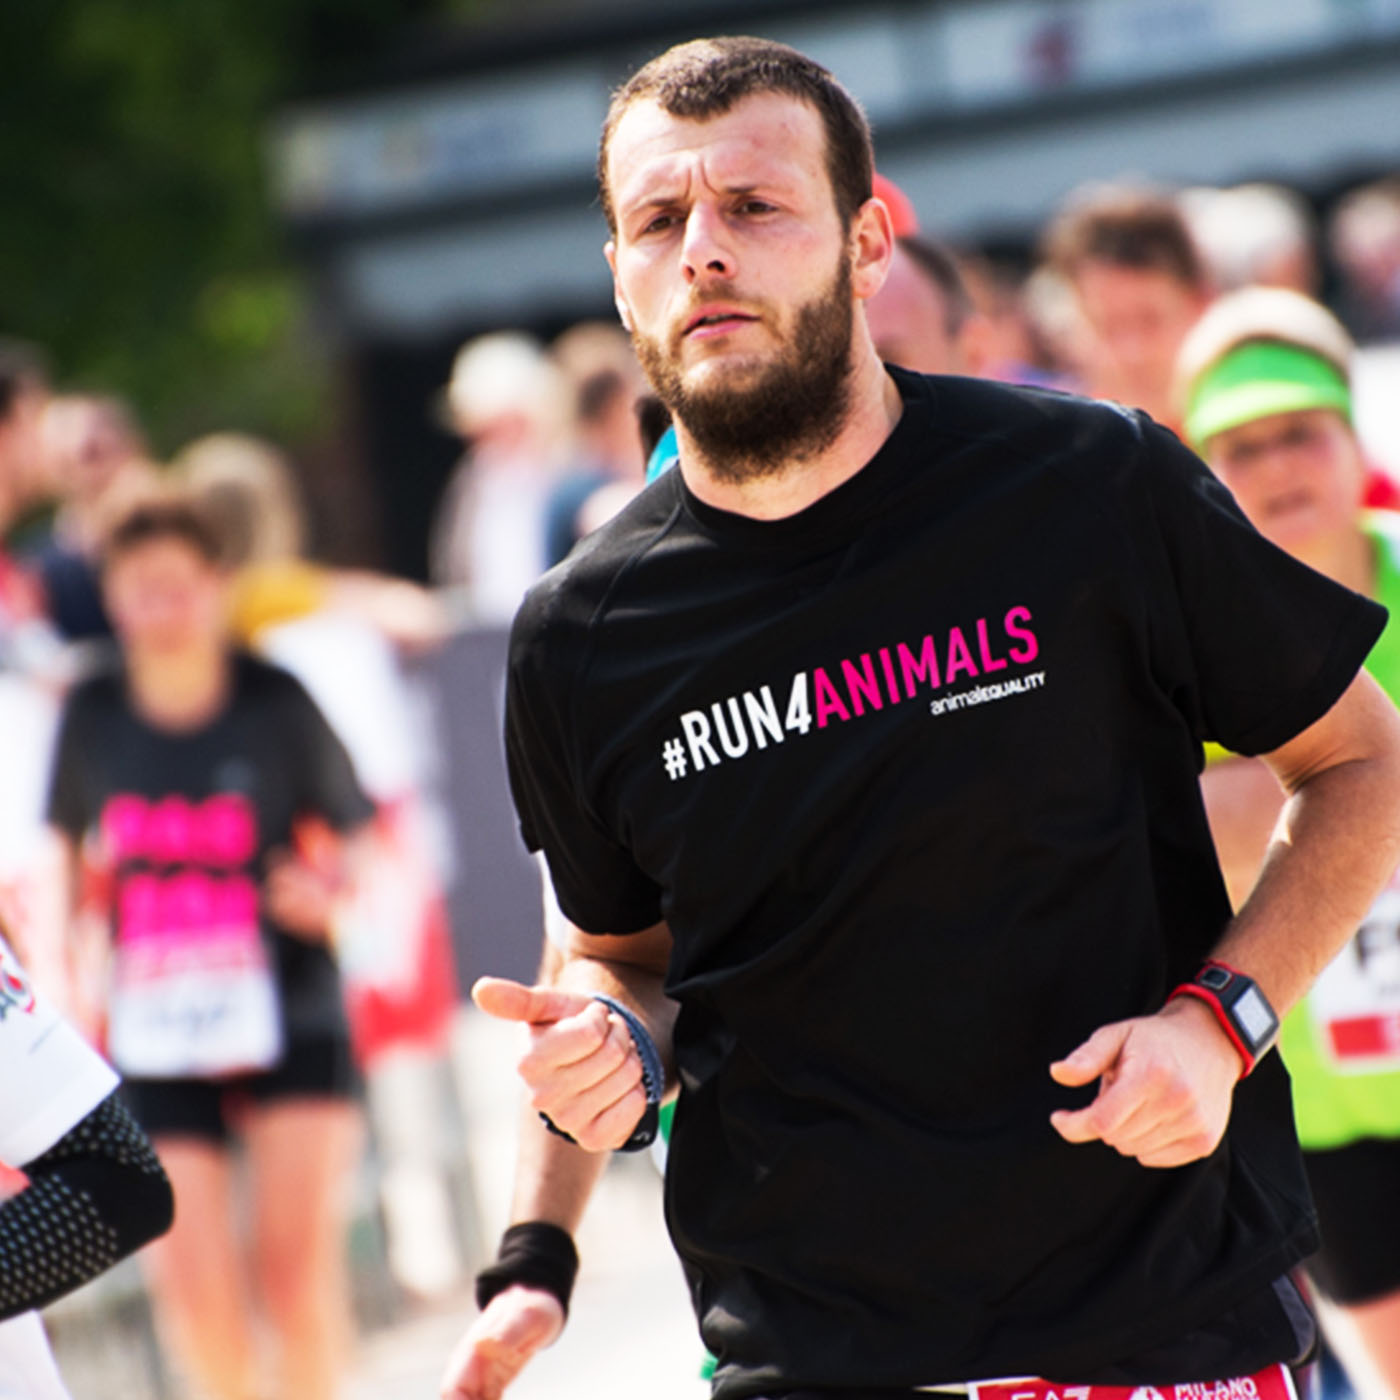 Milano Marathon corri animali